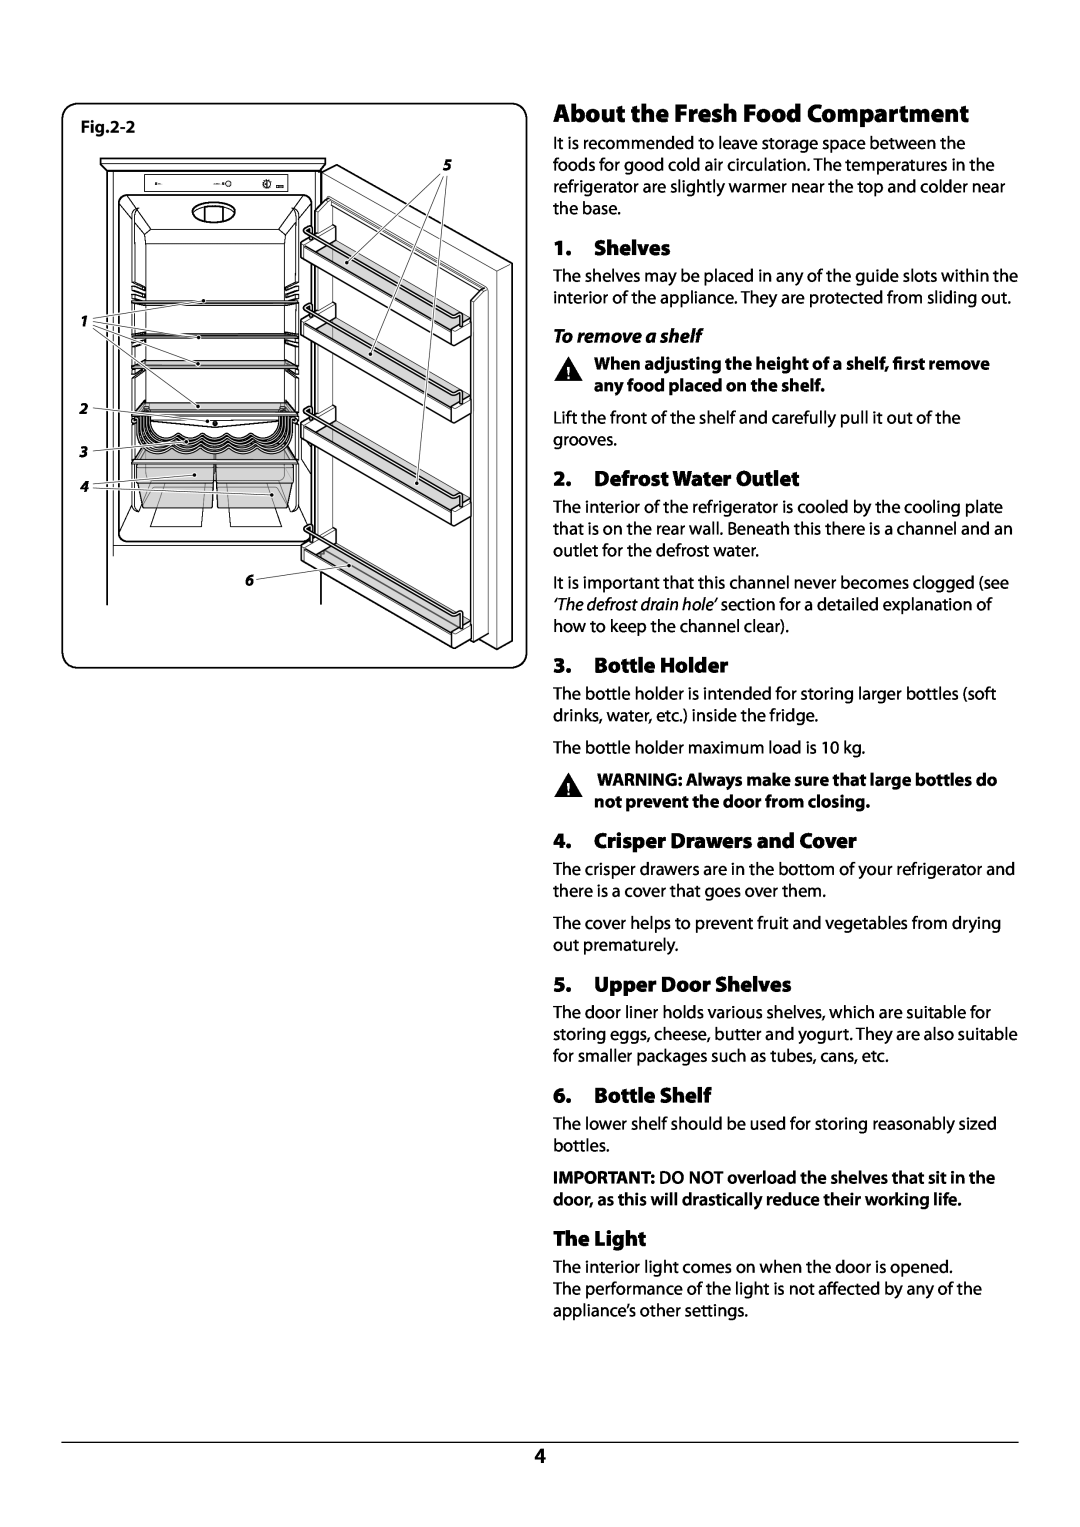 Rangemaster U110122-01B About the Fresh Food Compartment, Defrost Water Outlet, Bottle Holder, Upper Door Shelves 